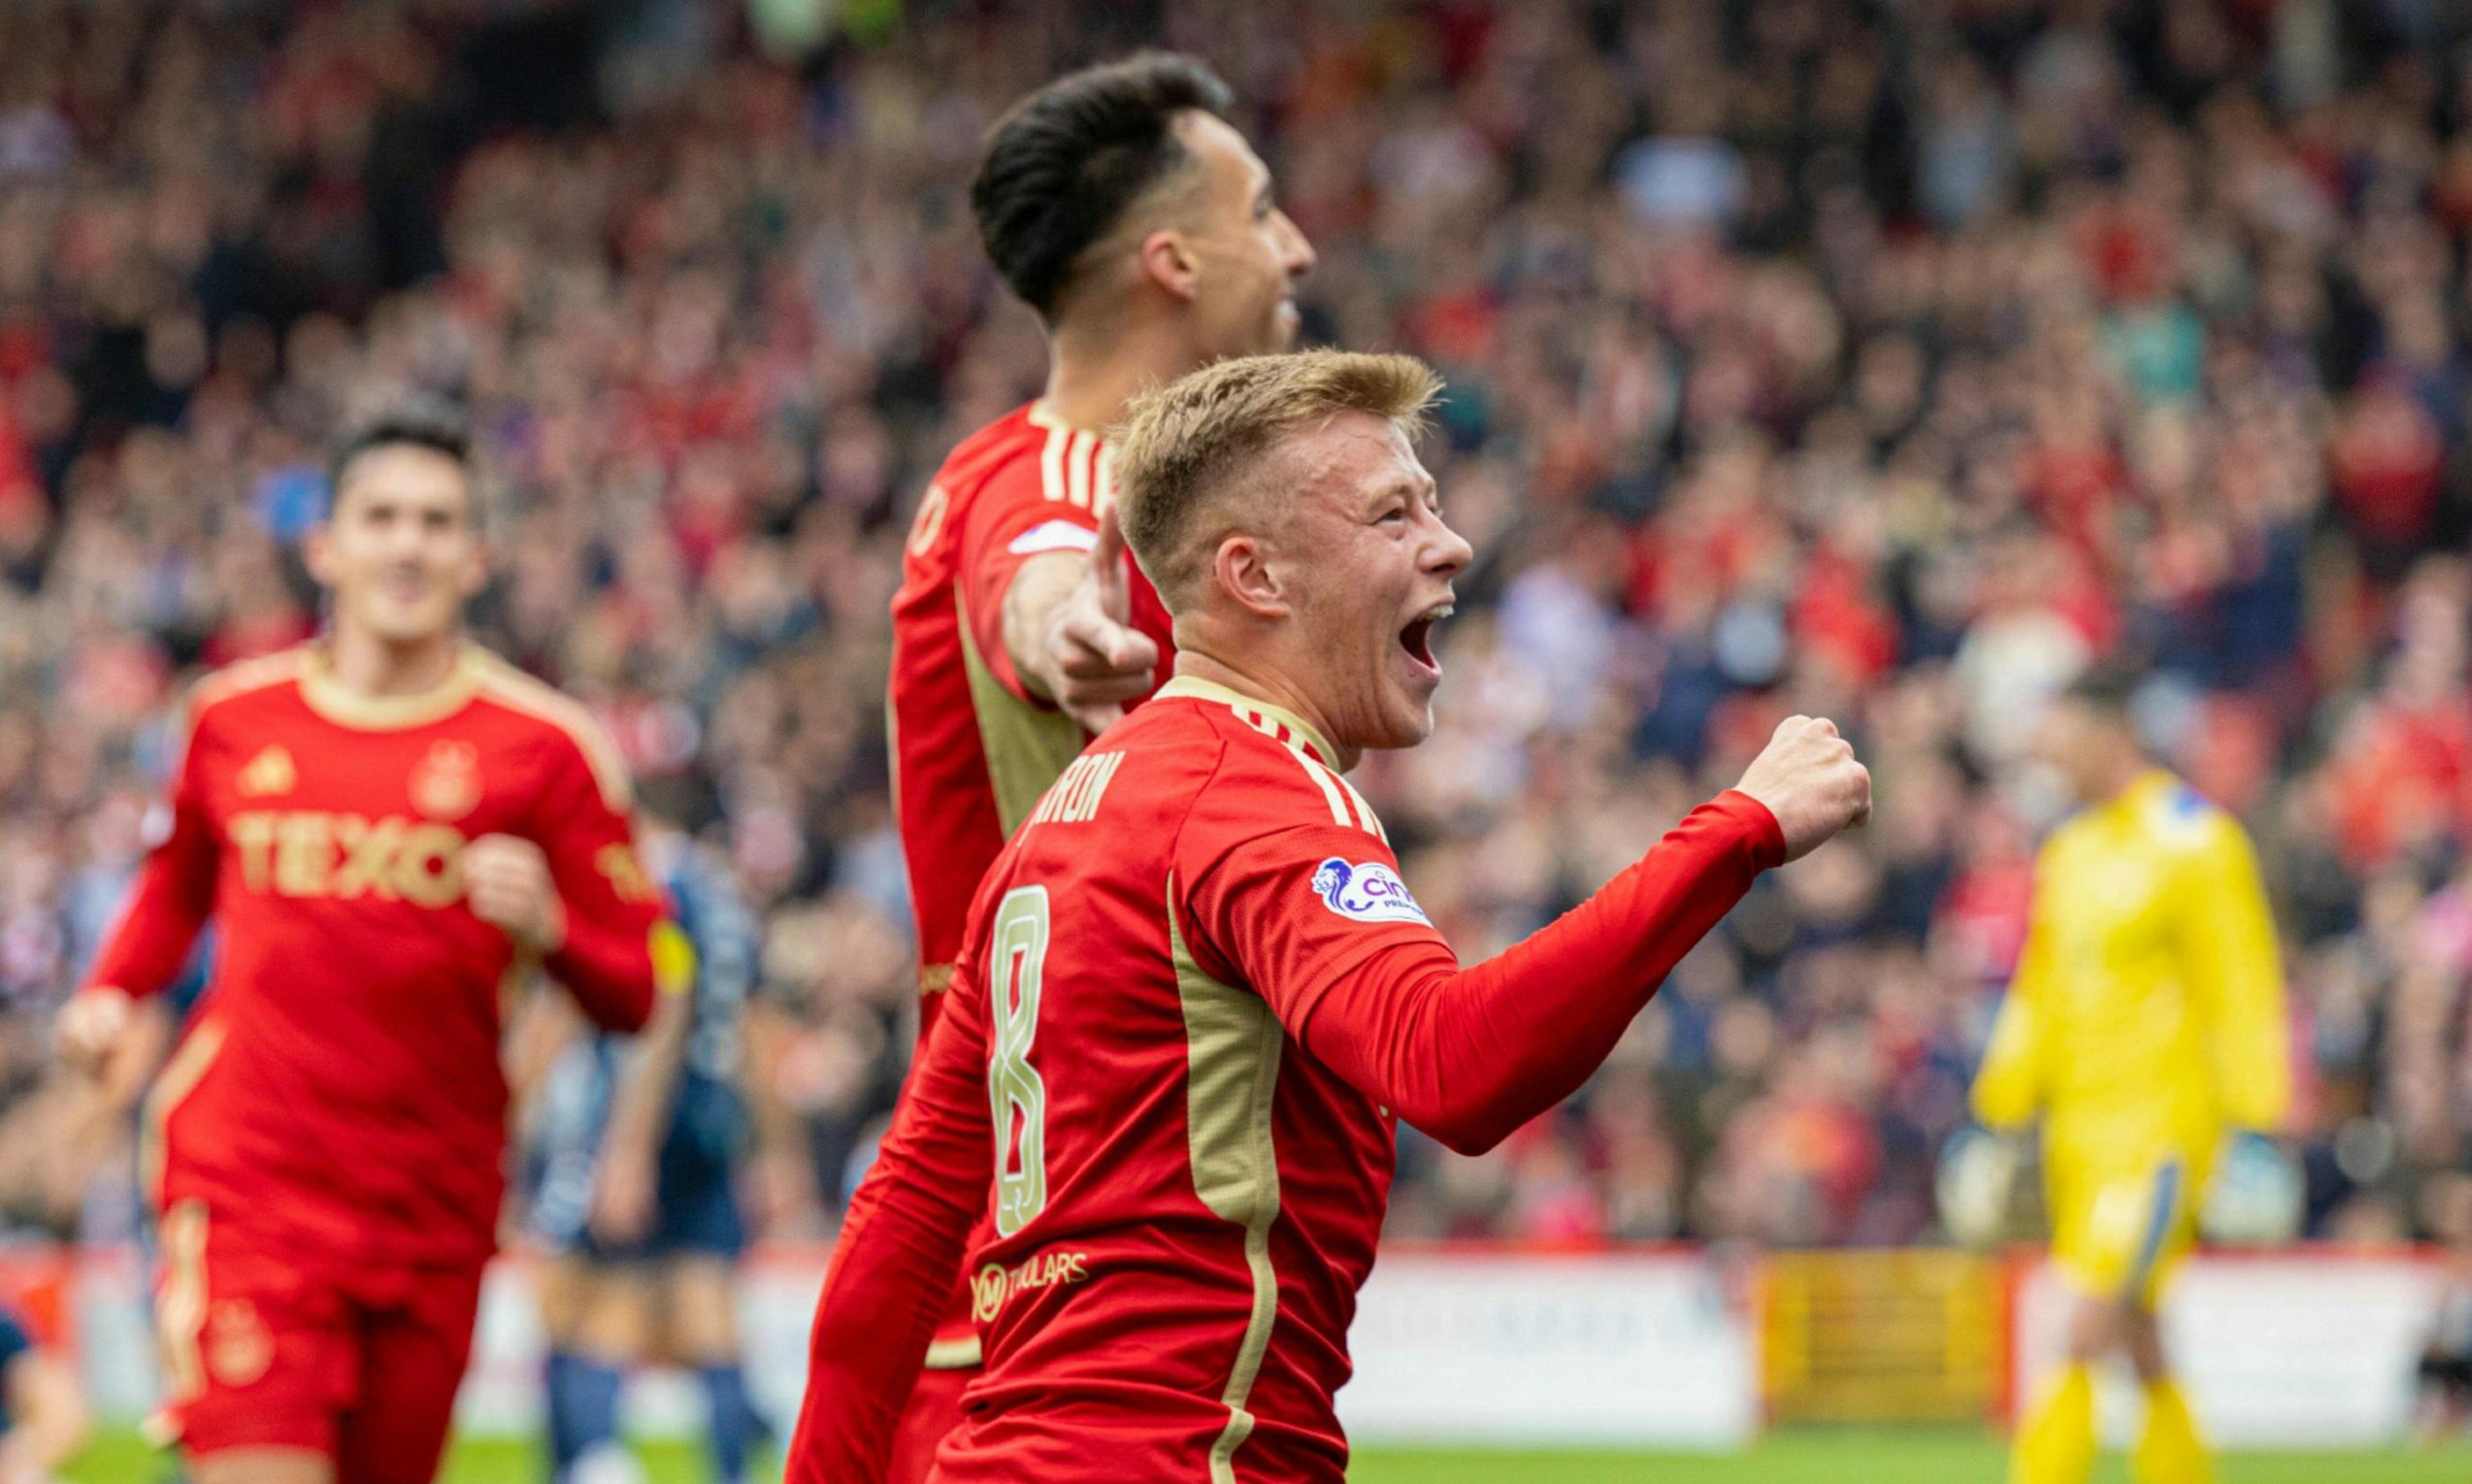 Aberdeen midfielder Connor Barron celebrates after Bojan Miovski scores to make it 1-0 against Ross County. 